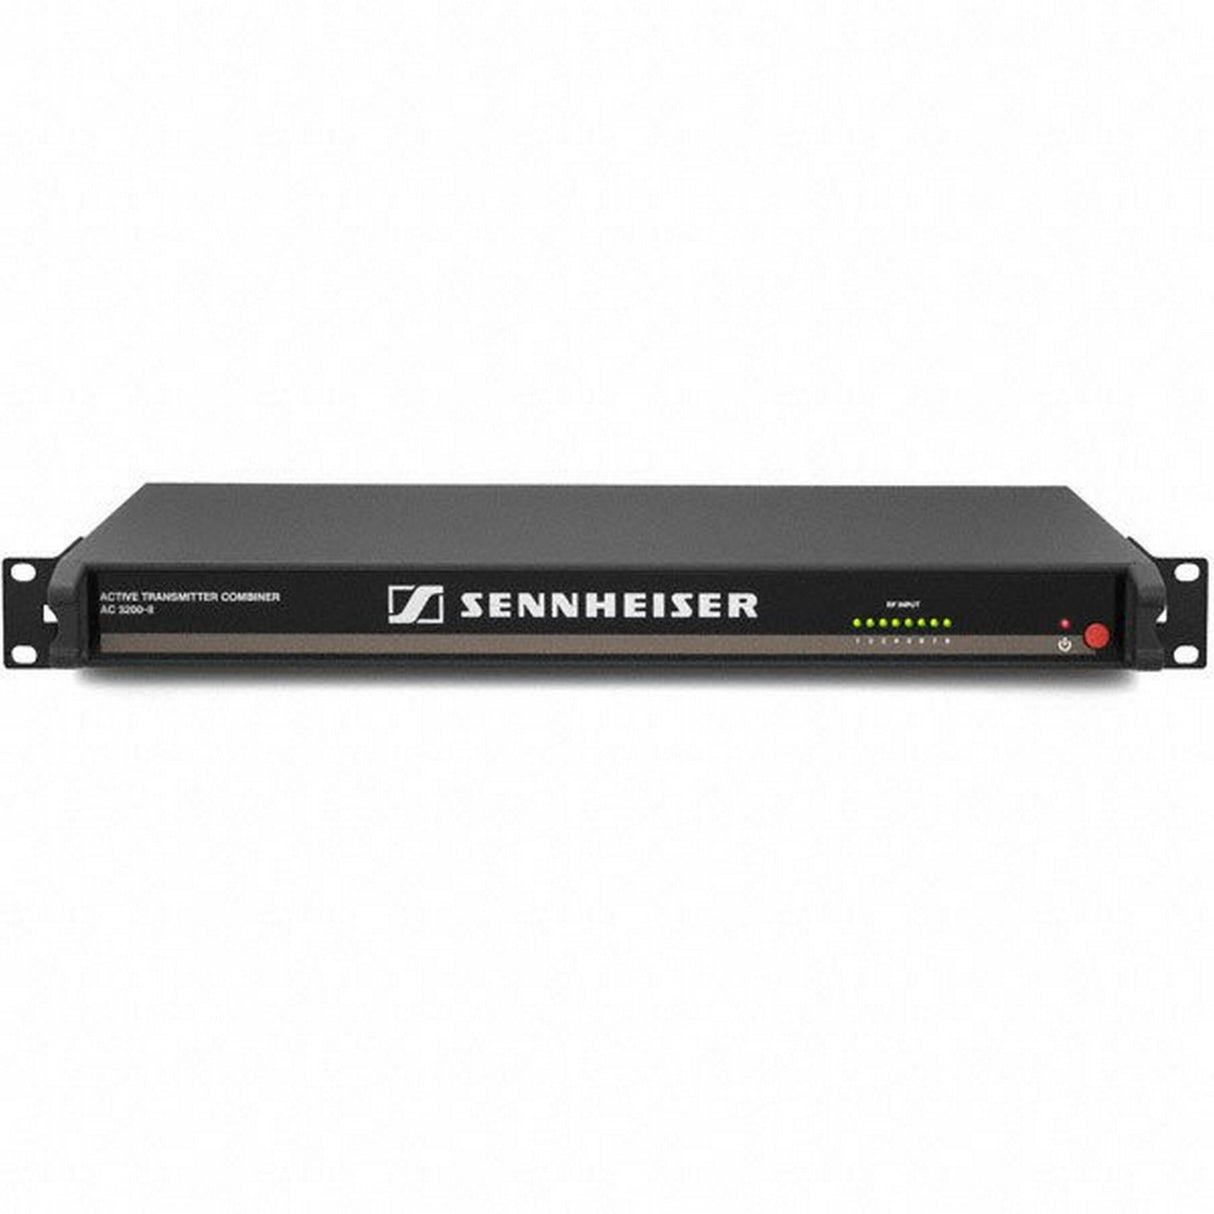 Sennheiser AC 3200-II Active High-Power 8:1 Antenna Combiner